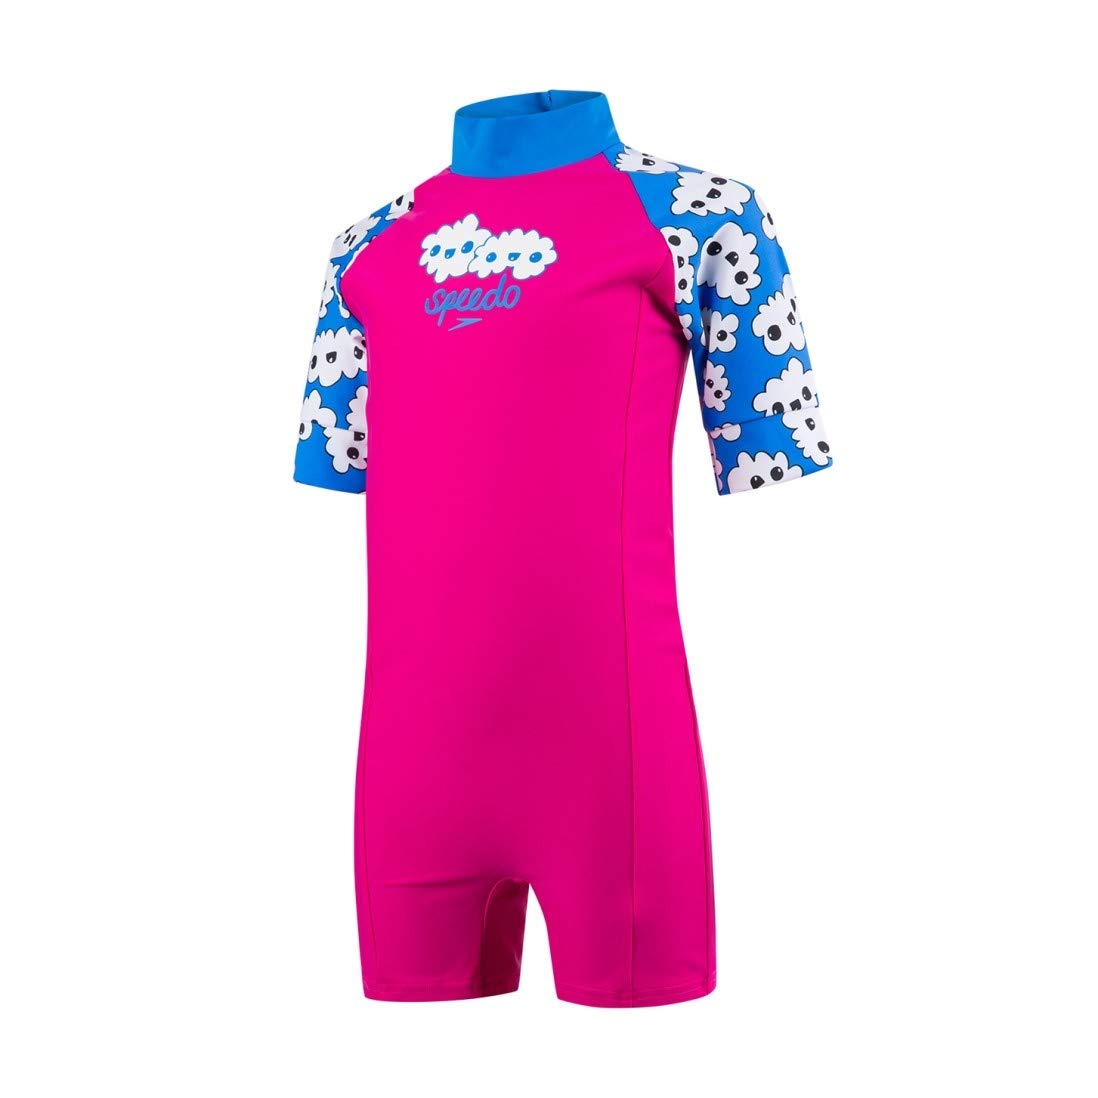 Speedo Swimwear unisex-child suit - Best Price online Prokicksports.com